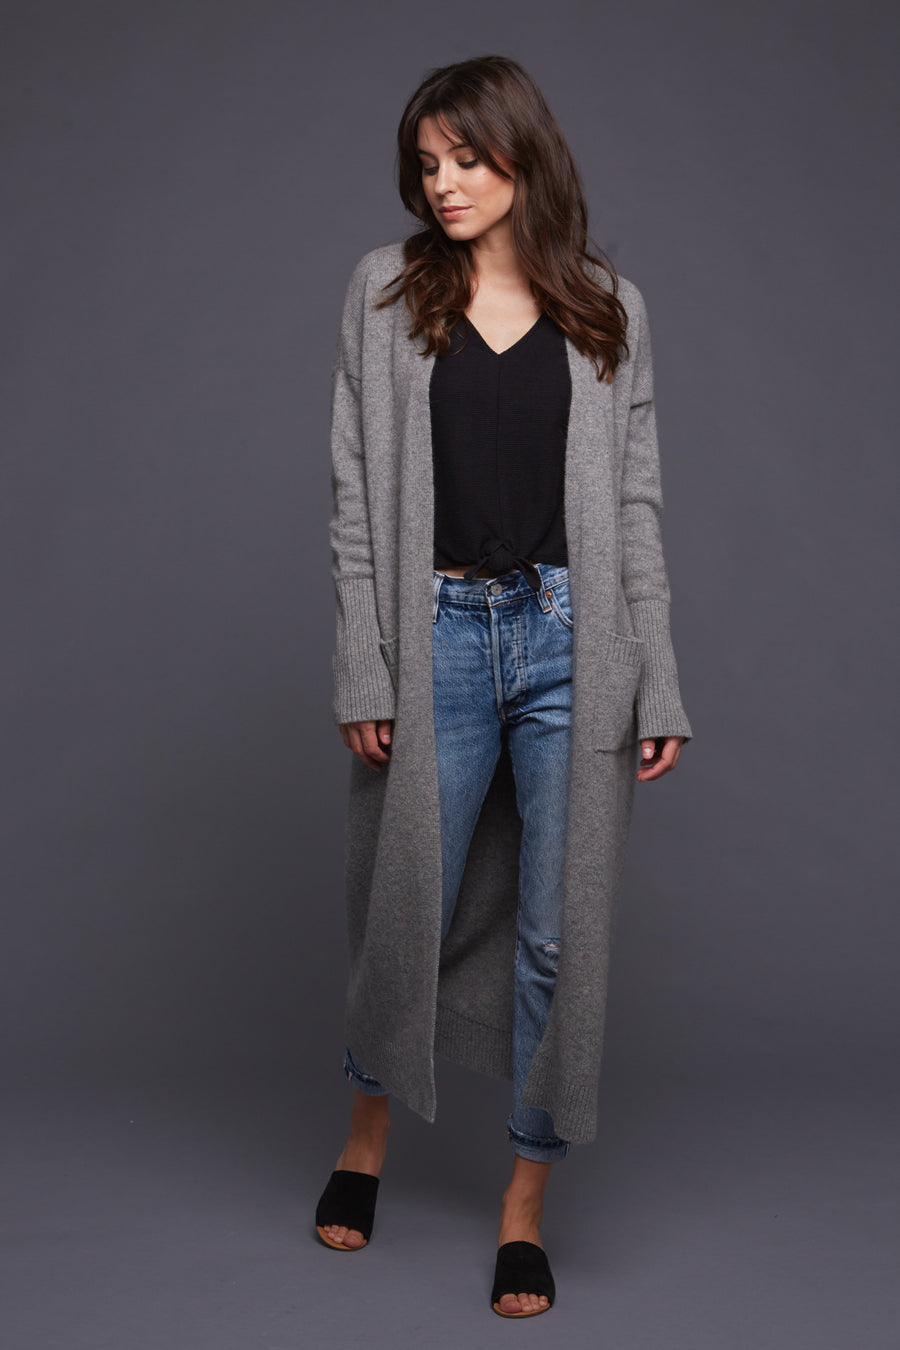 pine cashmere stella women's cashmere wool blend long cardigan coat duster in medium grey